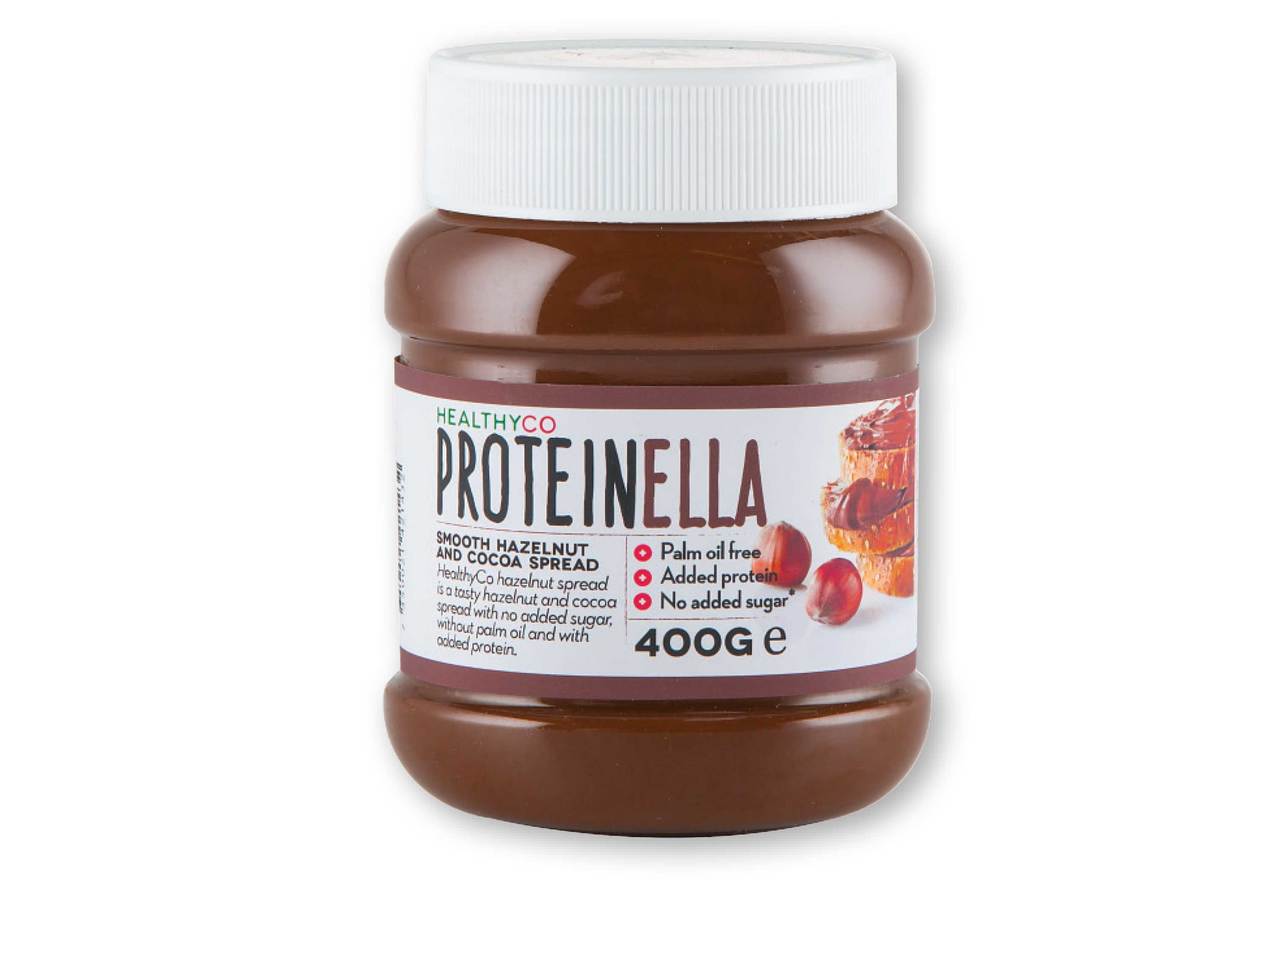 Proteinella Chocolate Hazelnut Spread